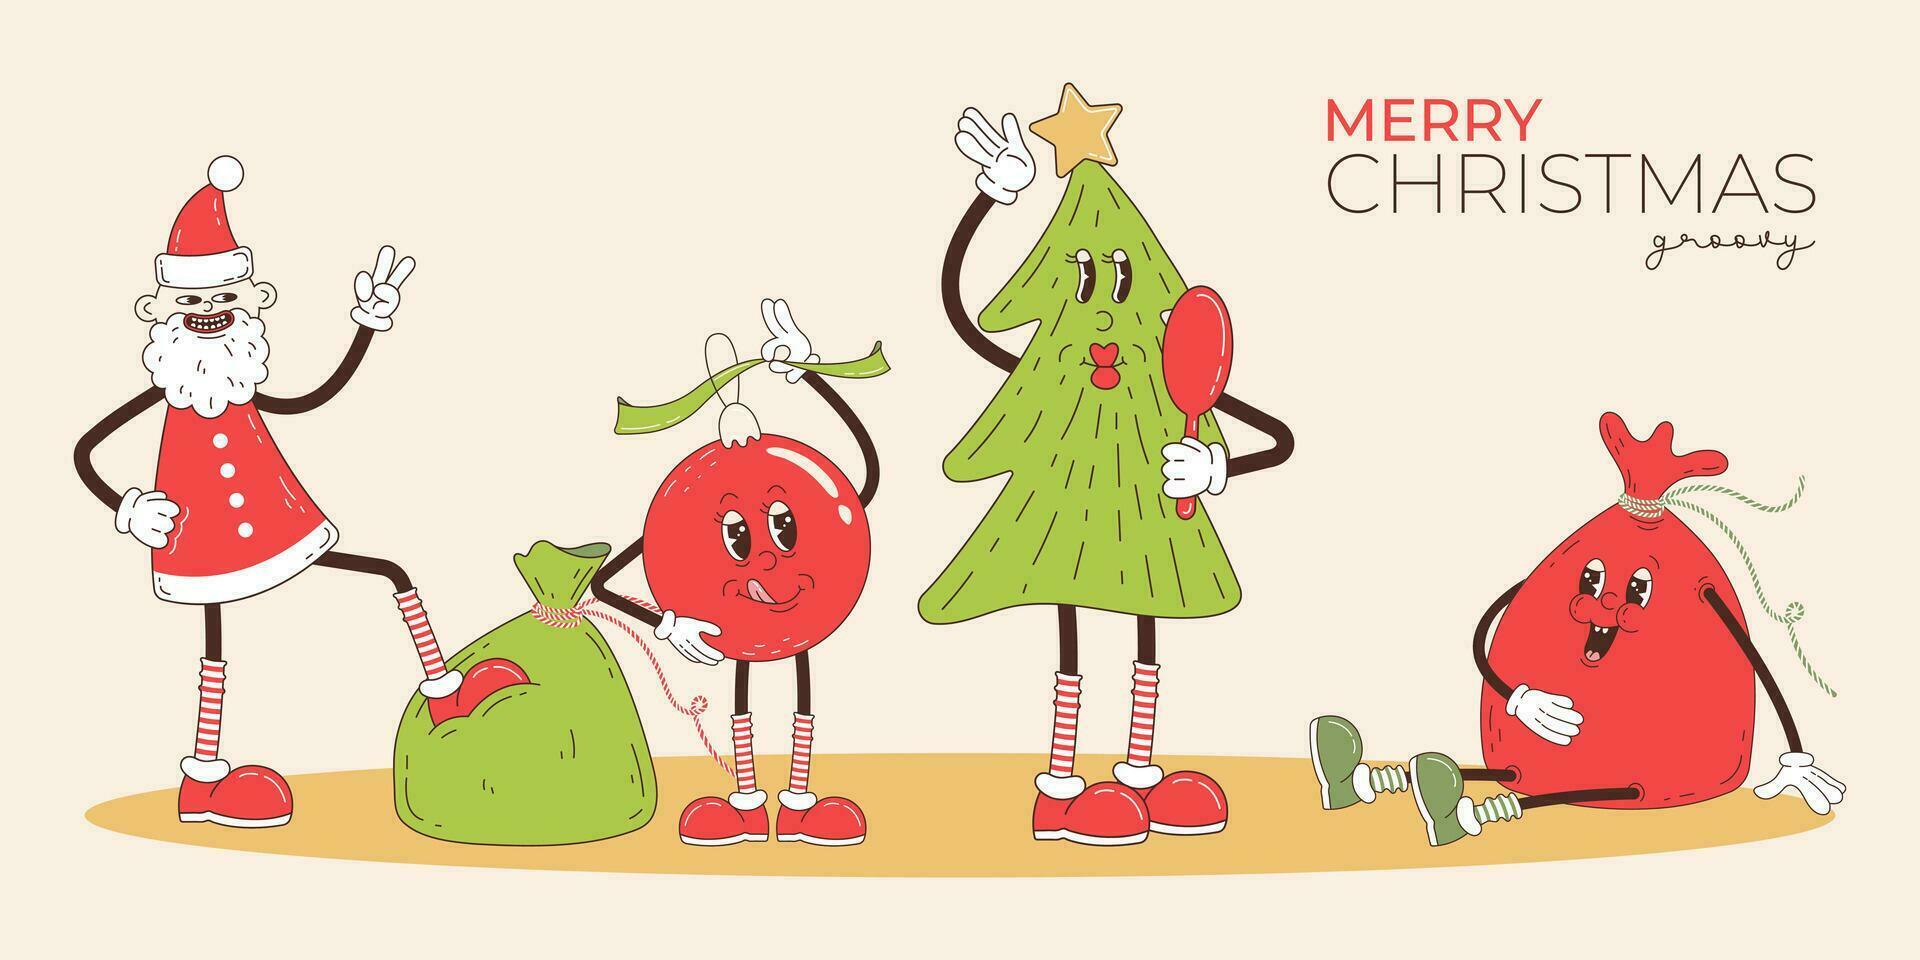 conjunto do retro desenho animado personagens-Papai Noel, Natal árvore, presente bolsa. alegre Natal e feliz Novo ano dentro na moda groovy hippie estilo. vetor